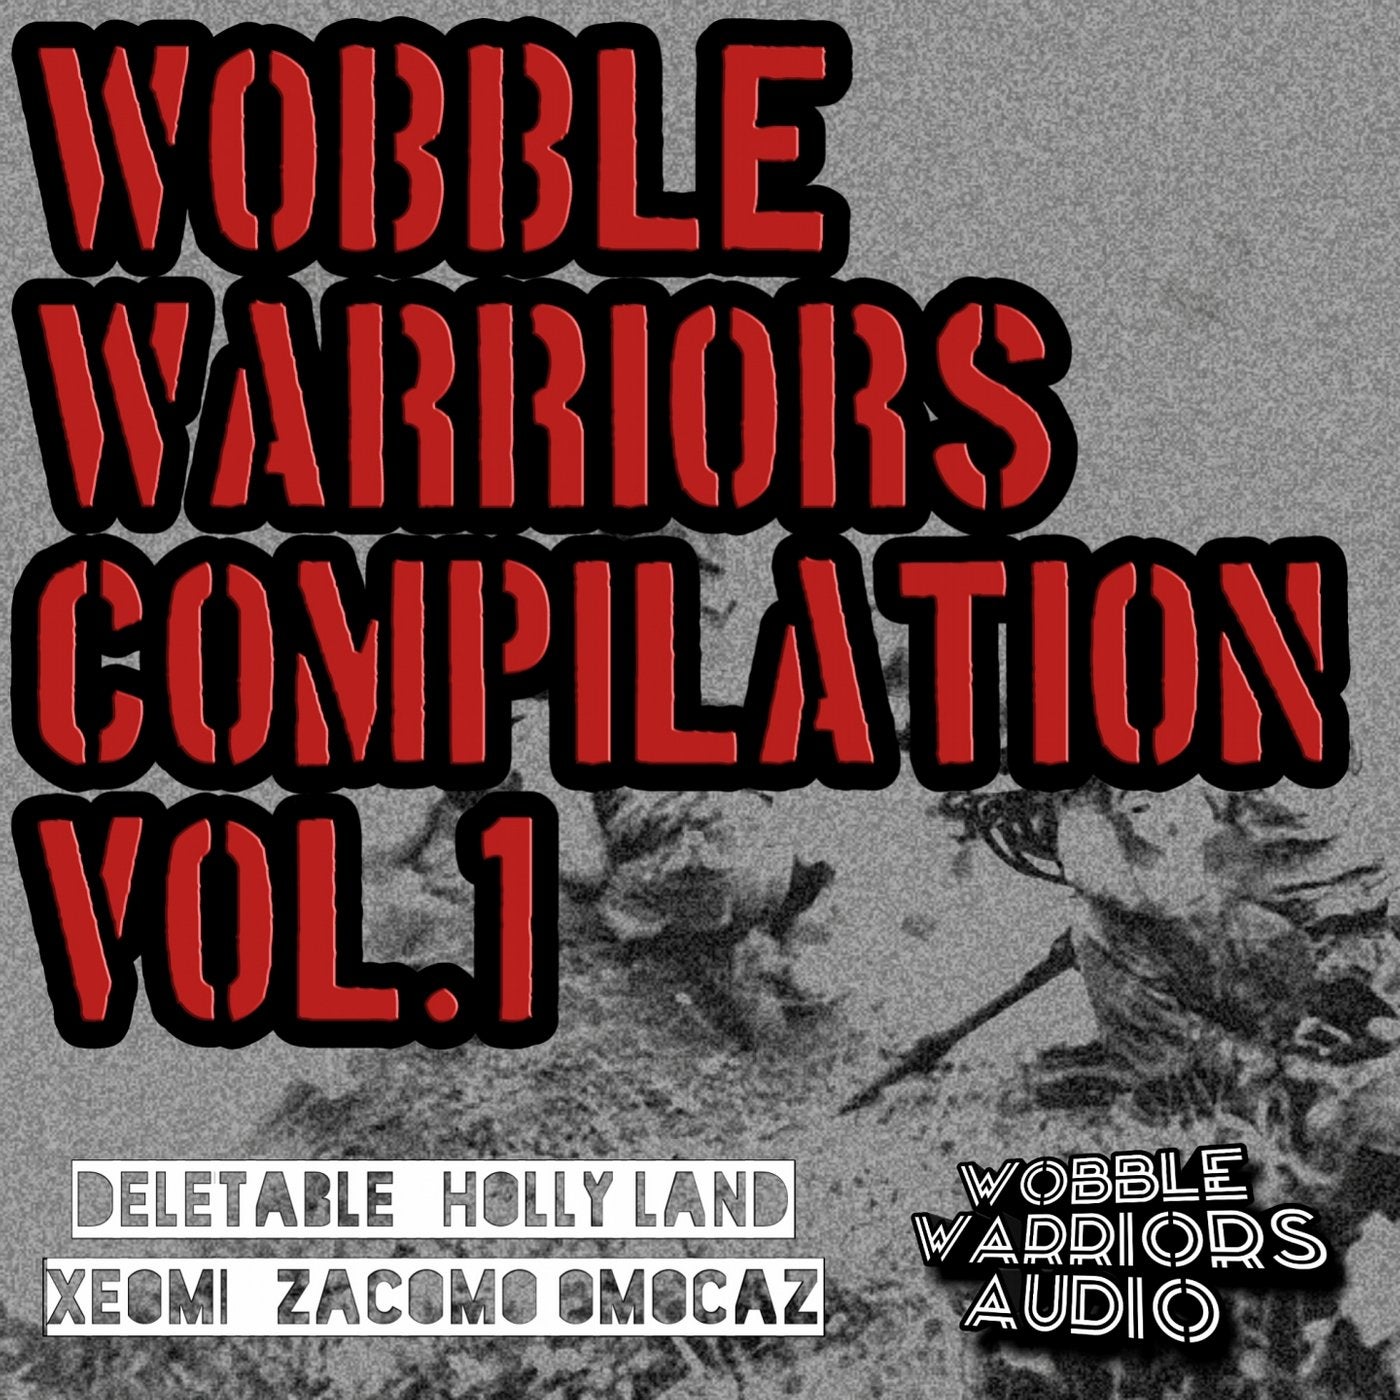 Wobble Warriors Compilation, Vol.1